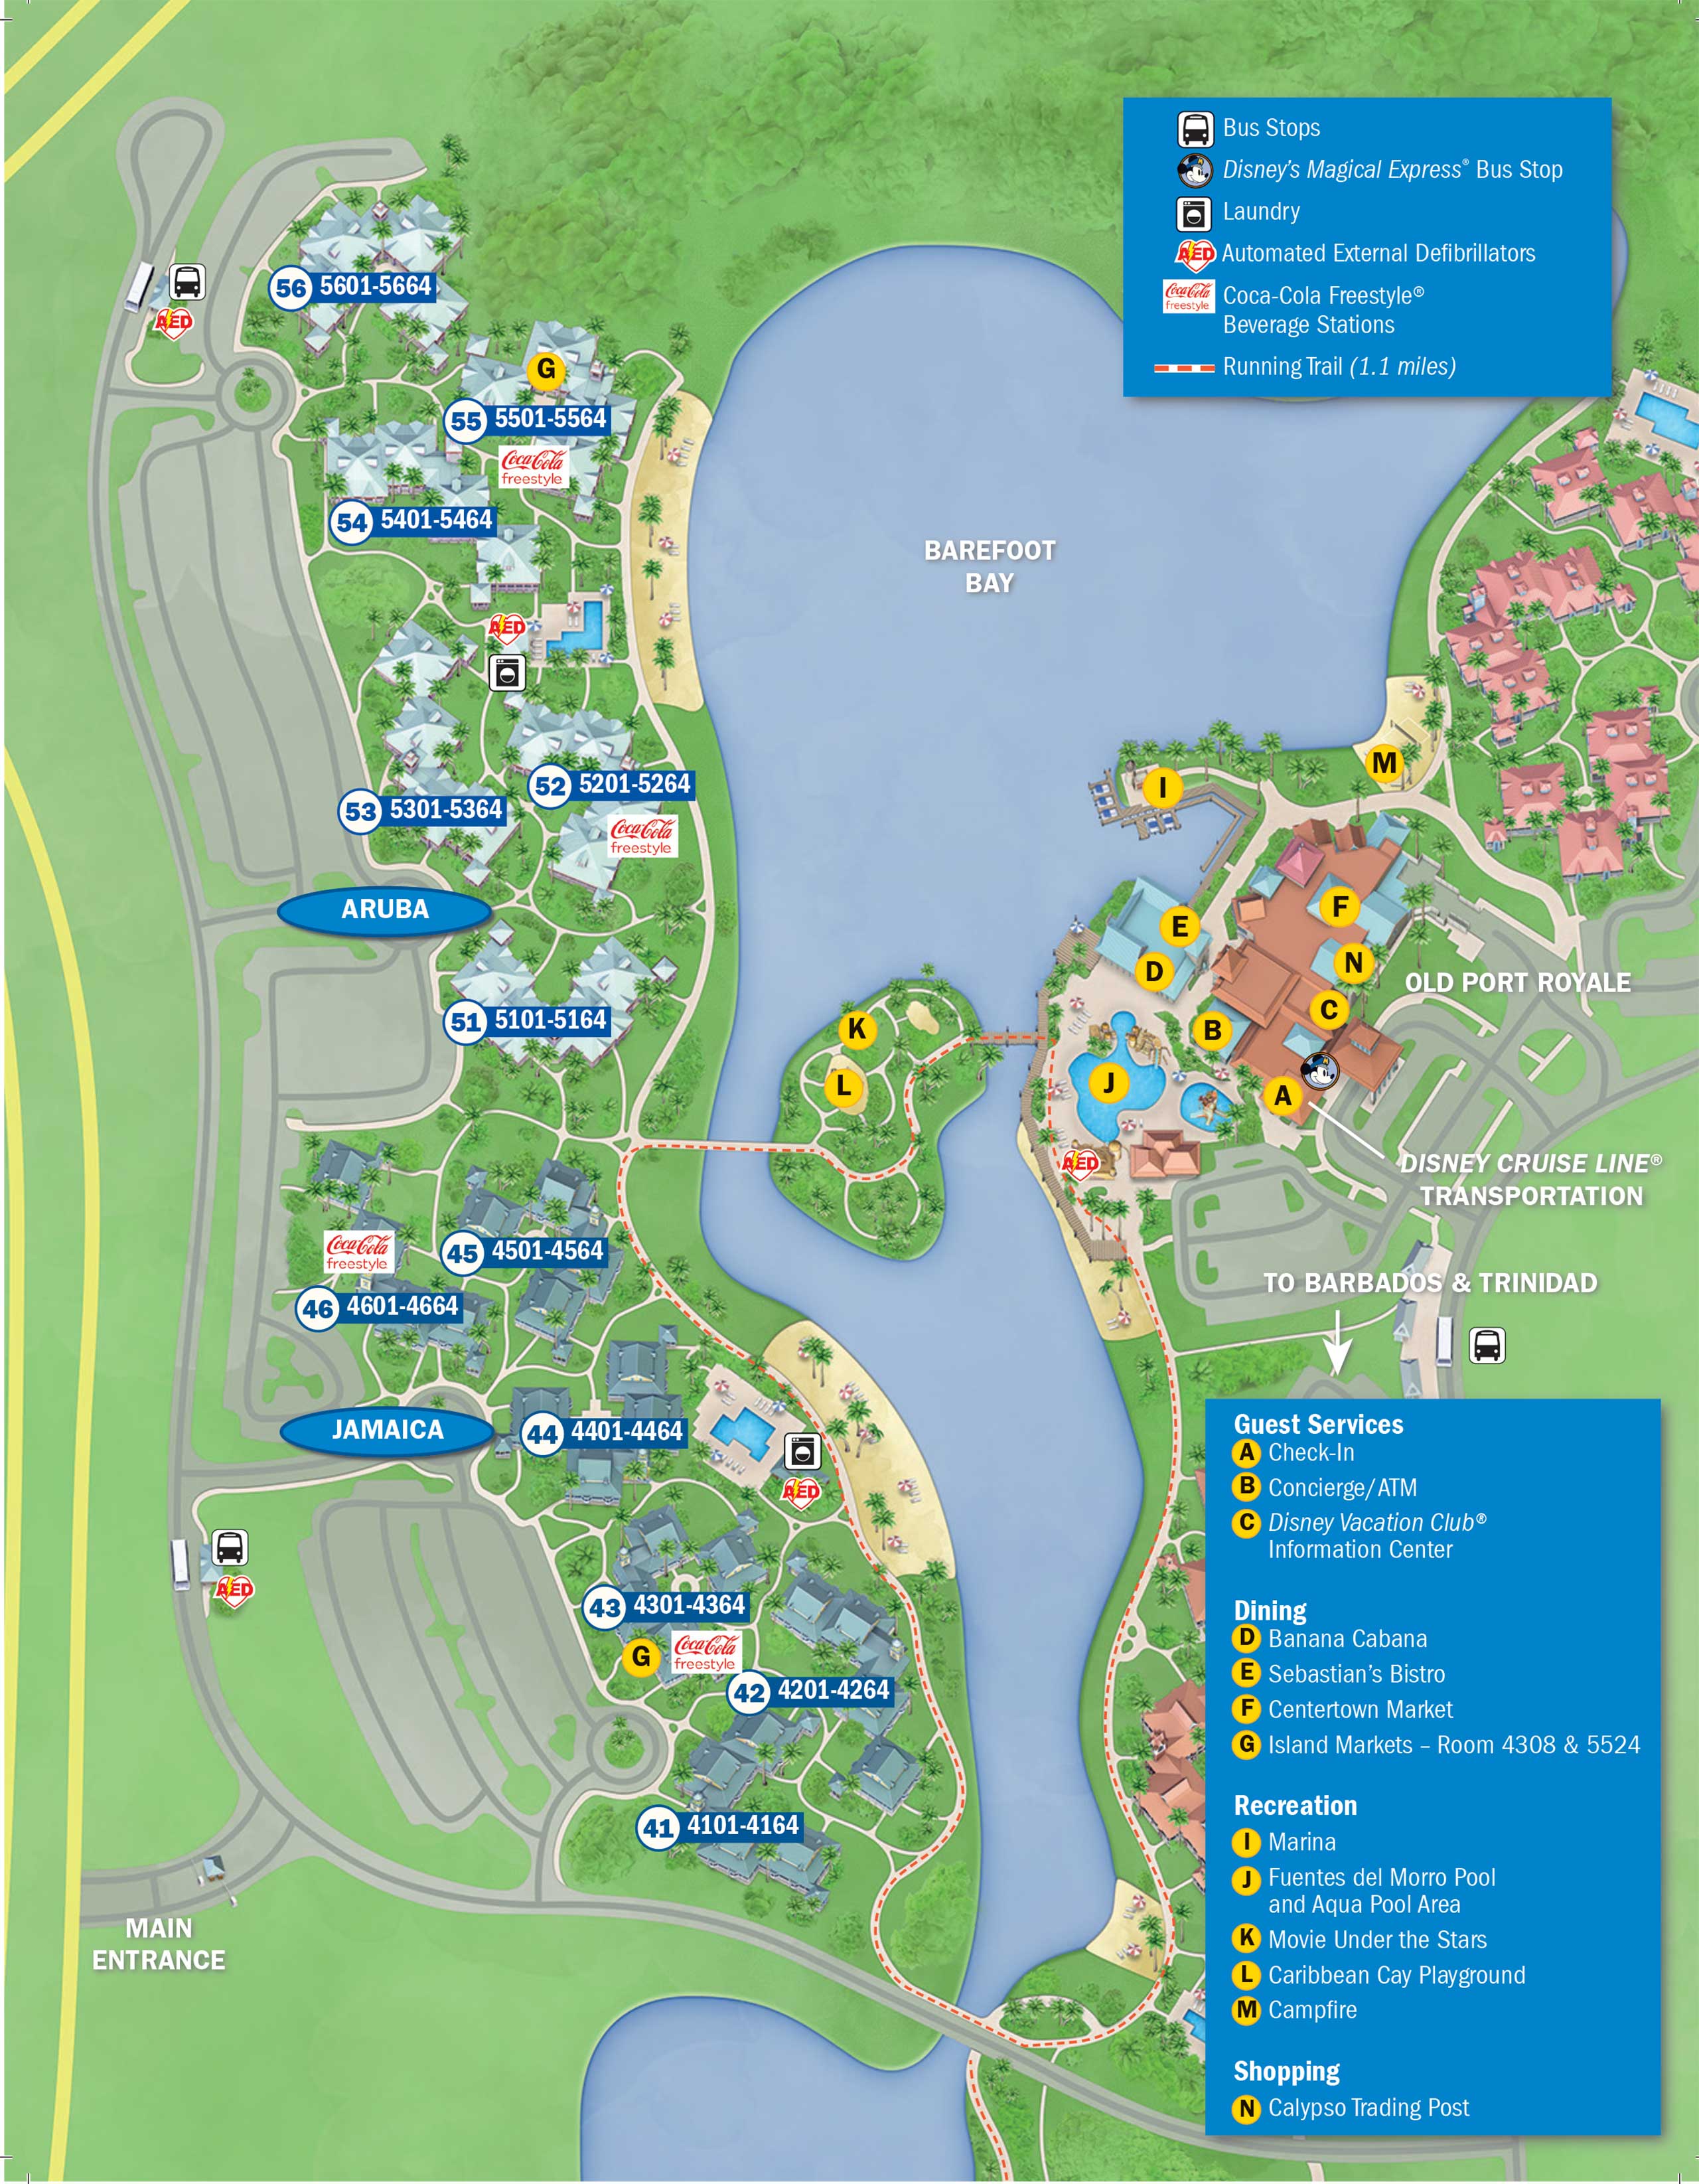 Updated Disney's Caribbean Beach Resort map Photo 2 of 2